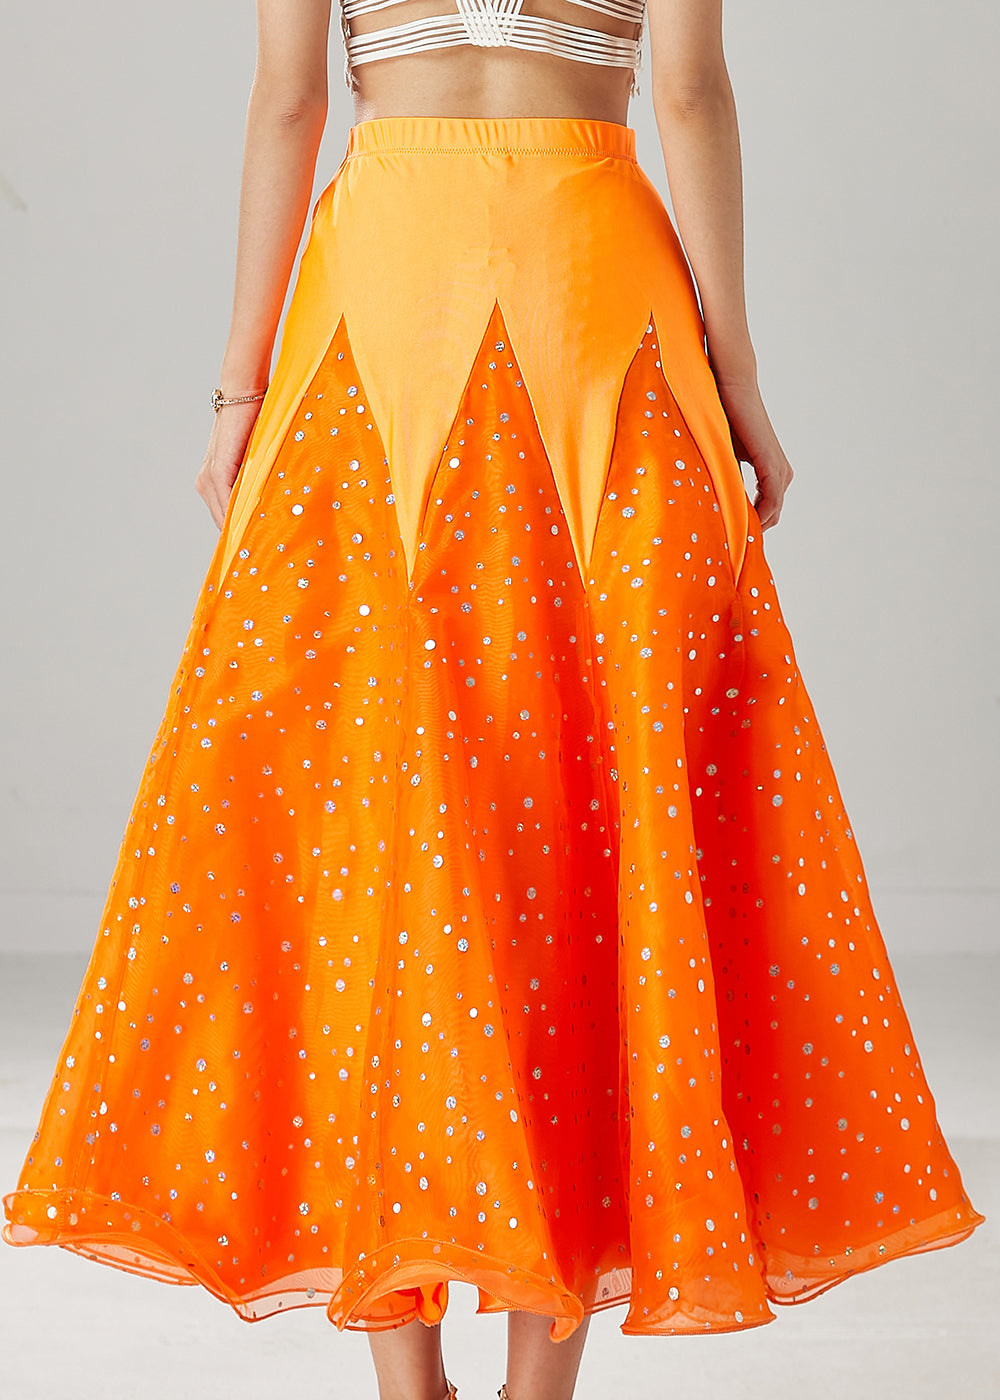 French Orange Silm Fit Patchwork Zircon Tulle Skirts Spring YU1034